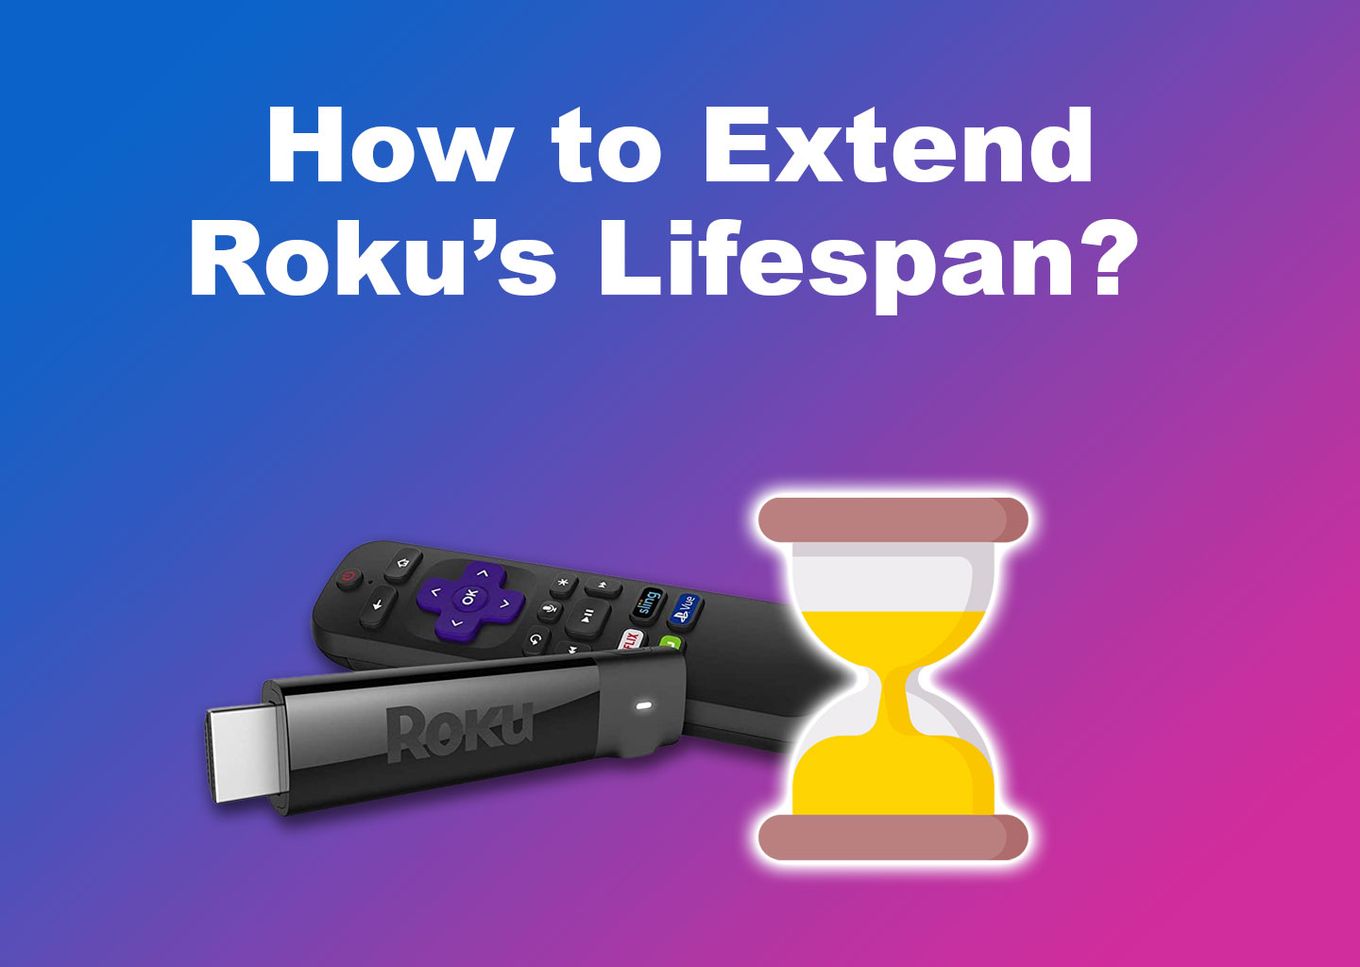 How to extend Roku's lifespan